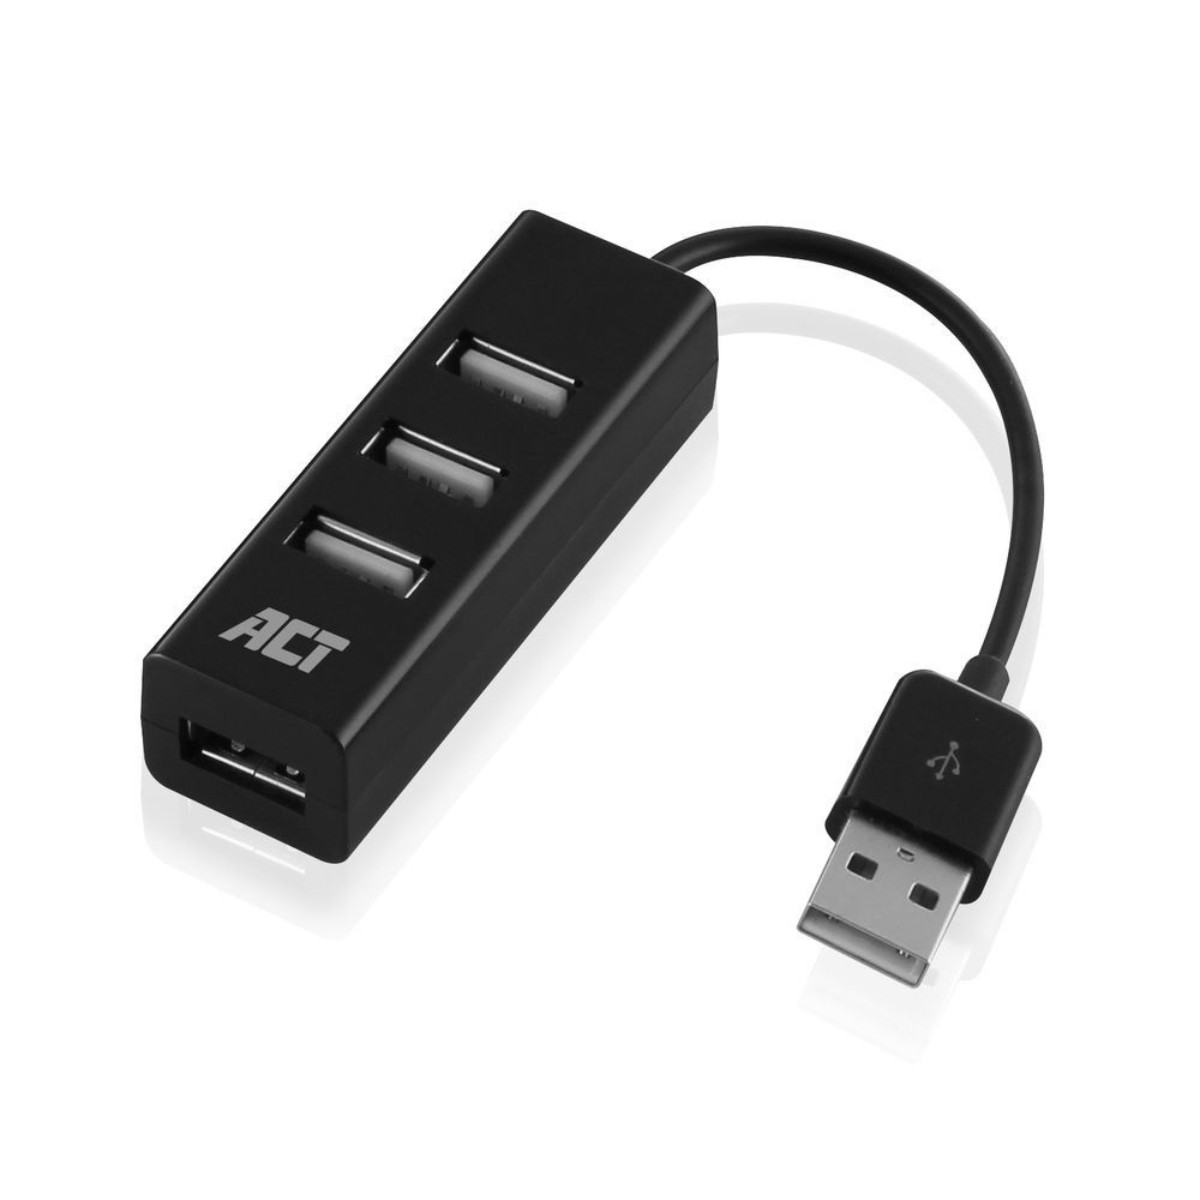 AC6205, USB Hub, ACT Schwarz